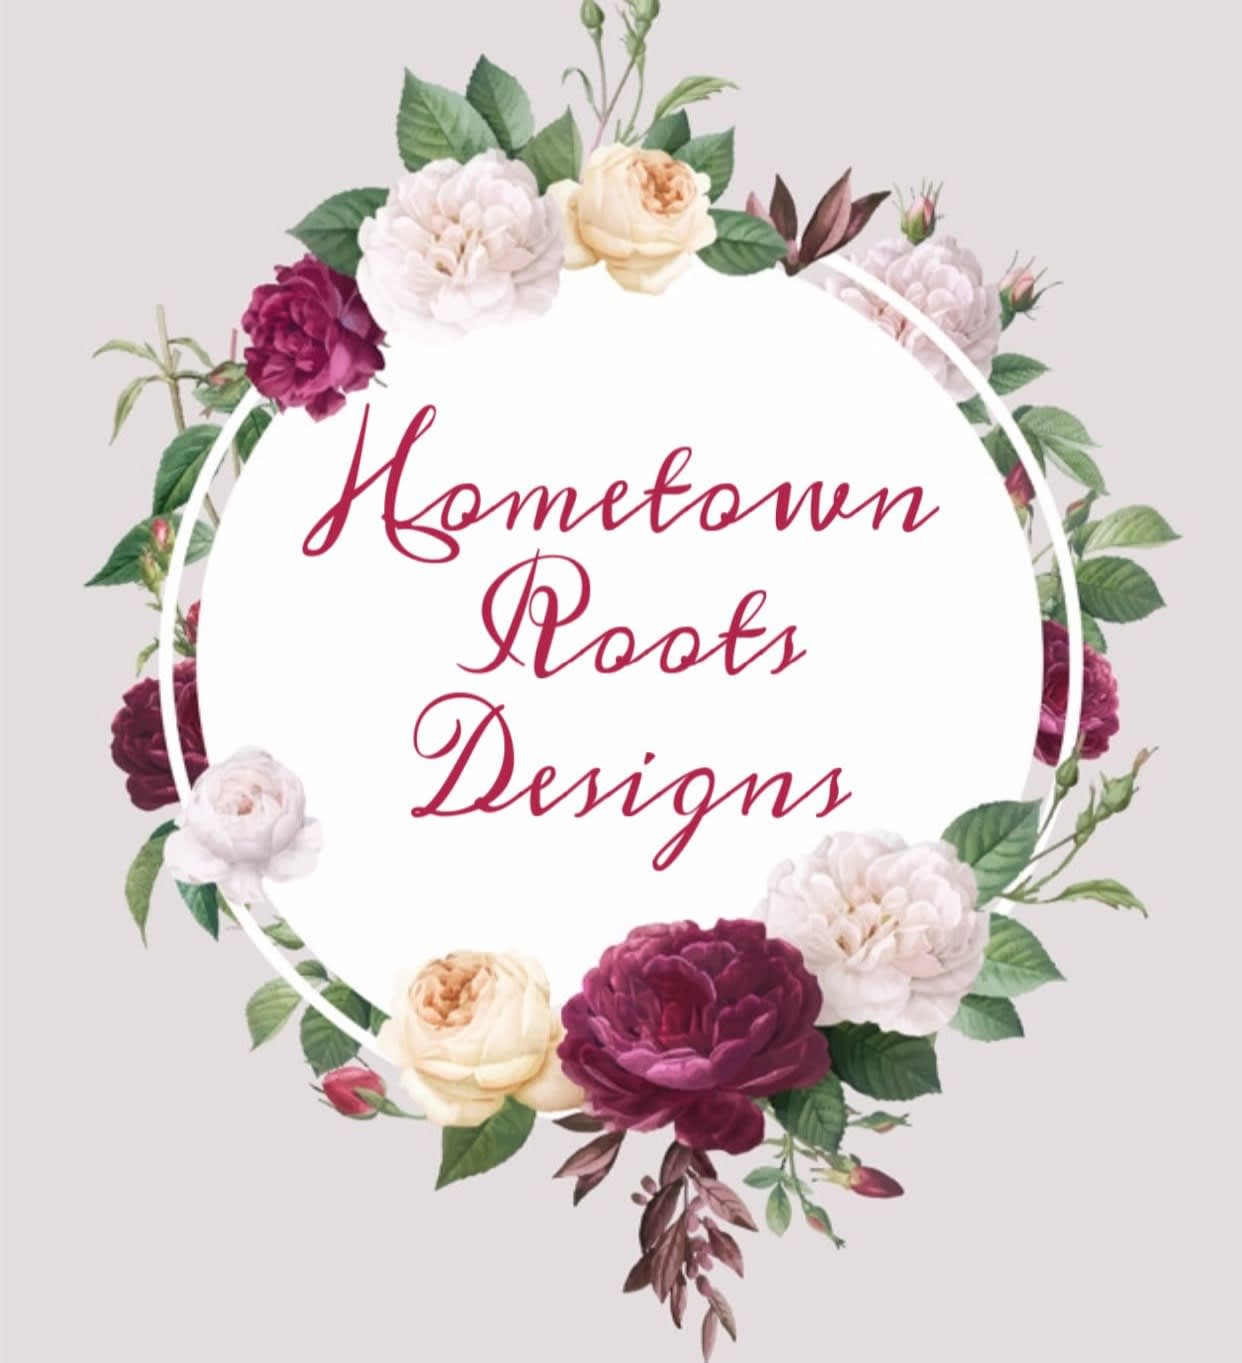 Hometown Roots Designs